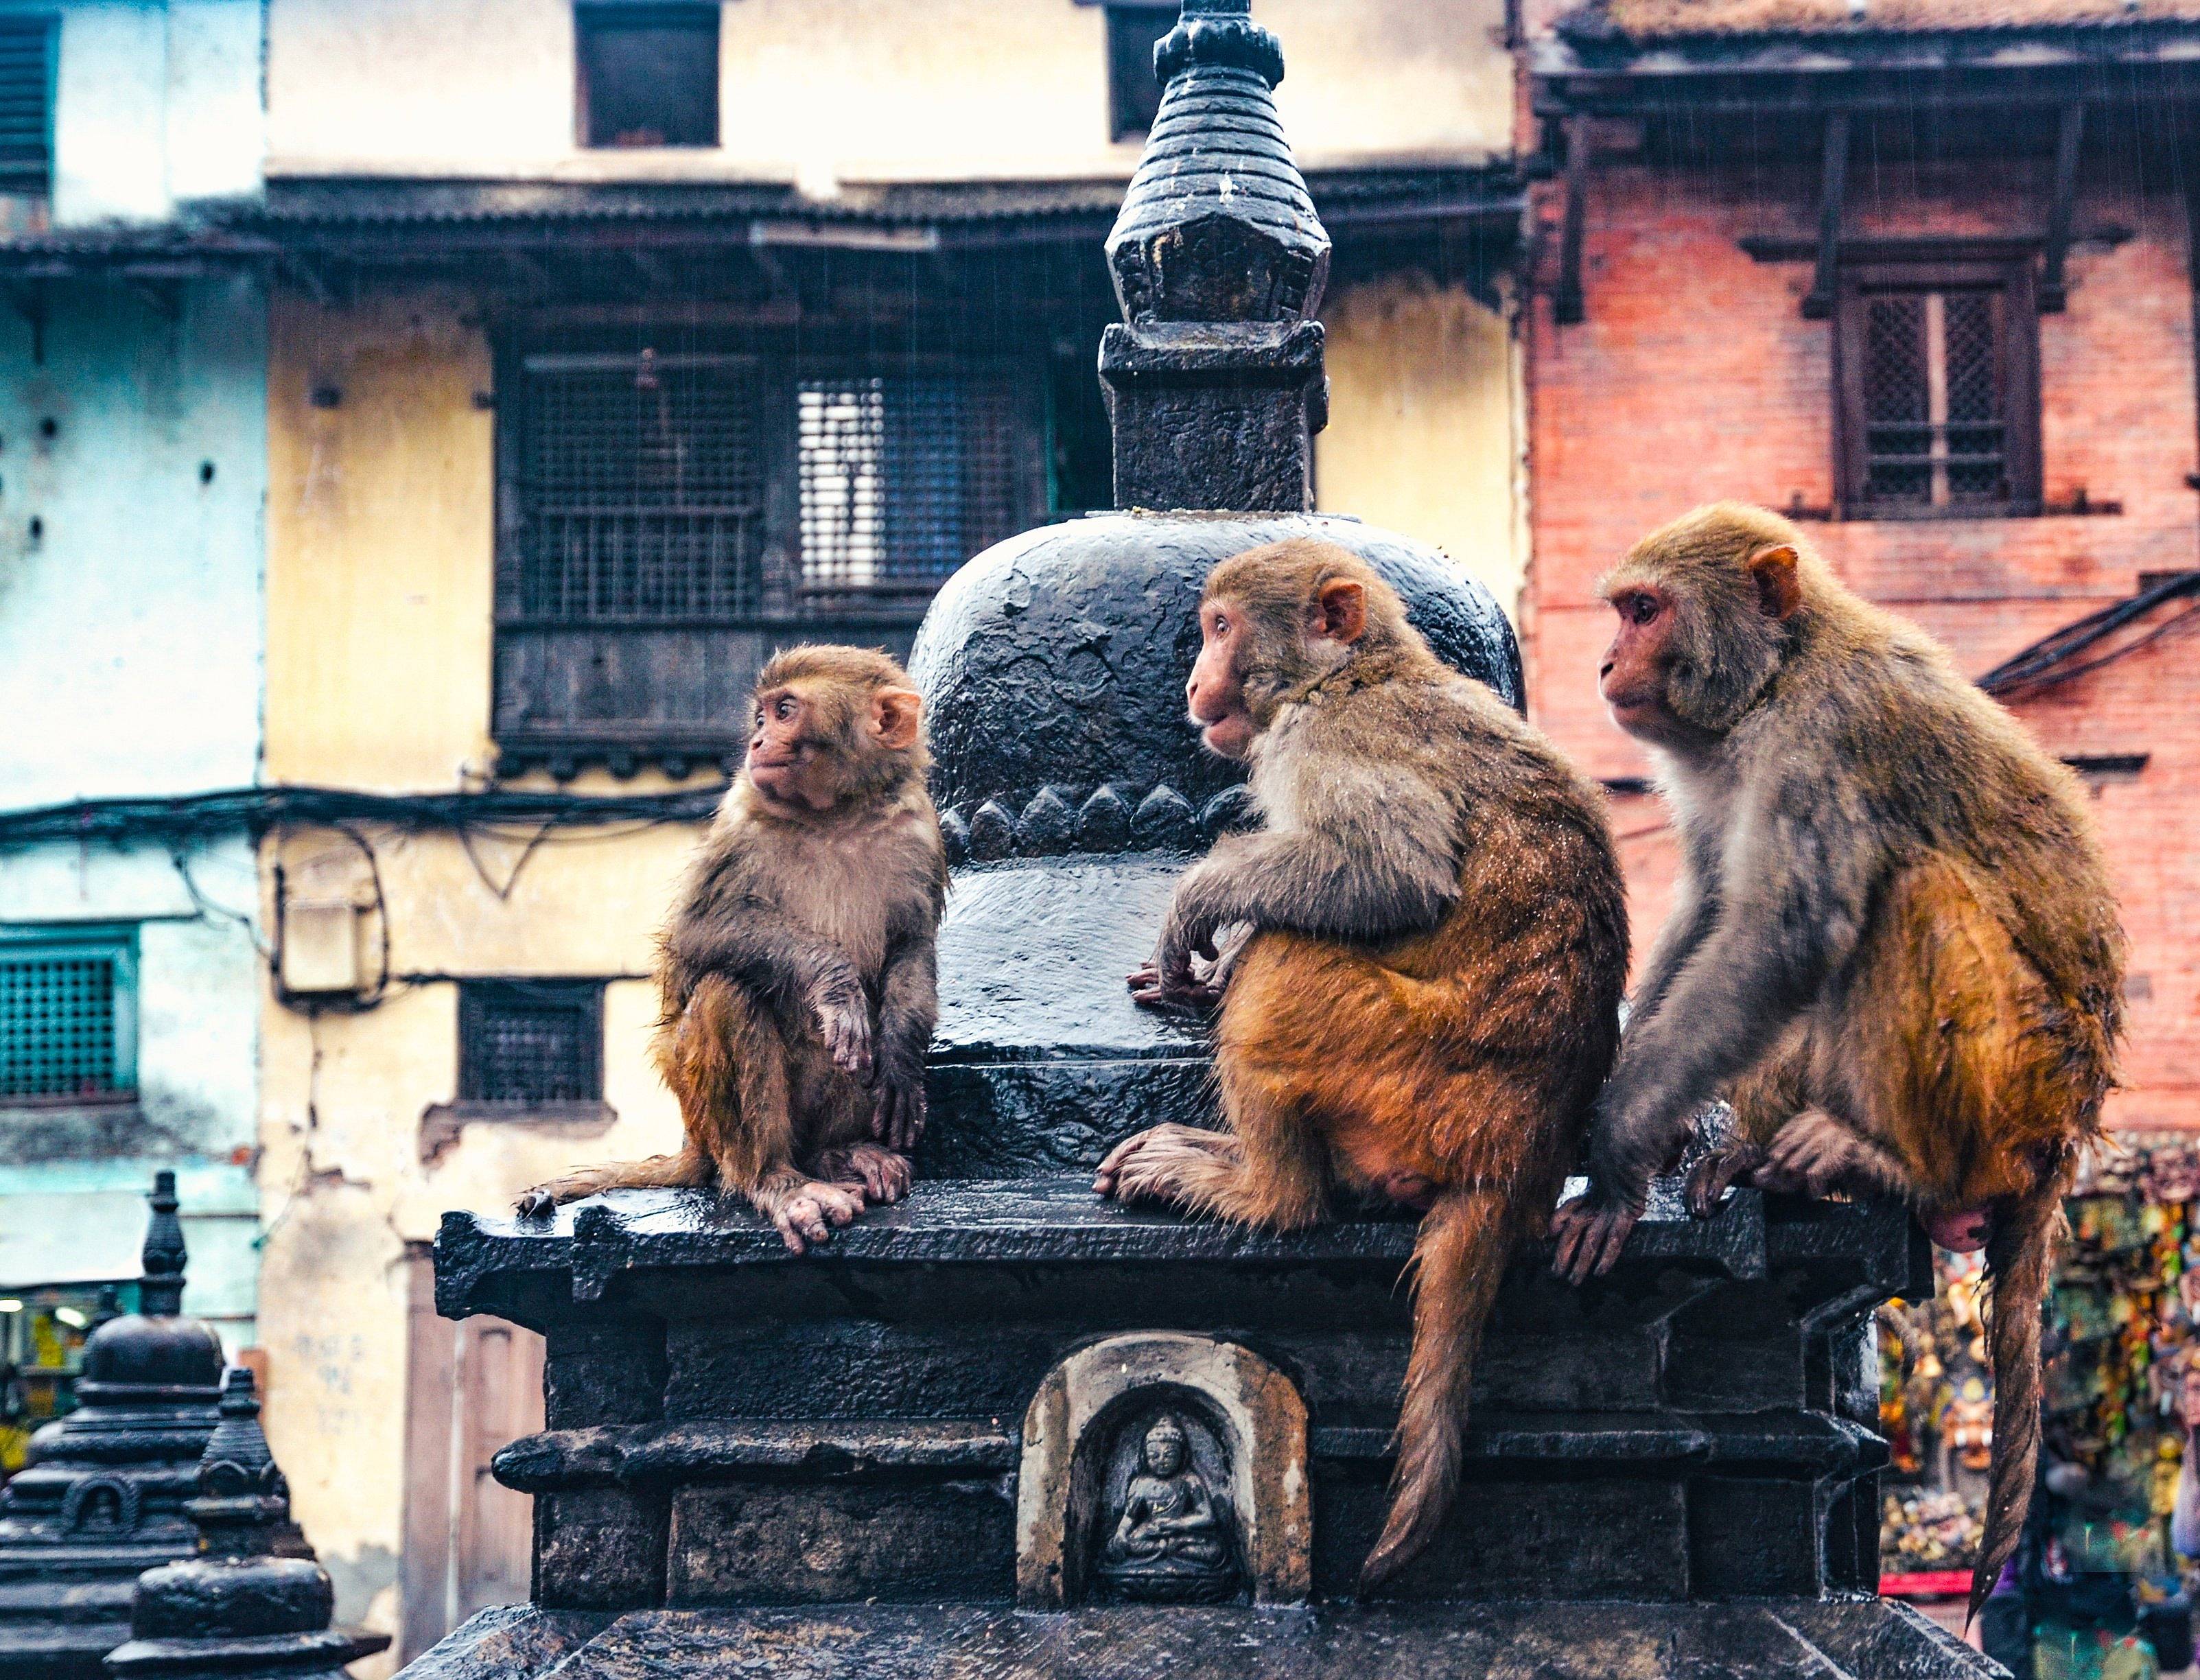 Familienreise, kombiniert aus Kultur, Natur und Safari in Nepal